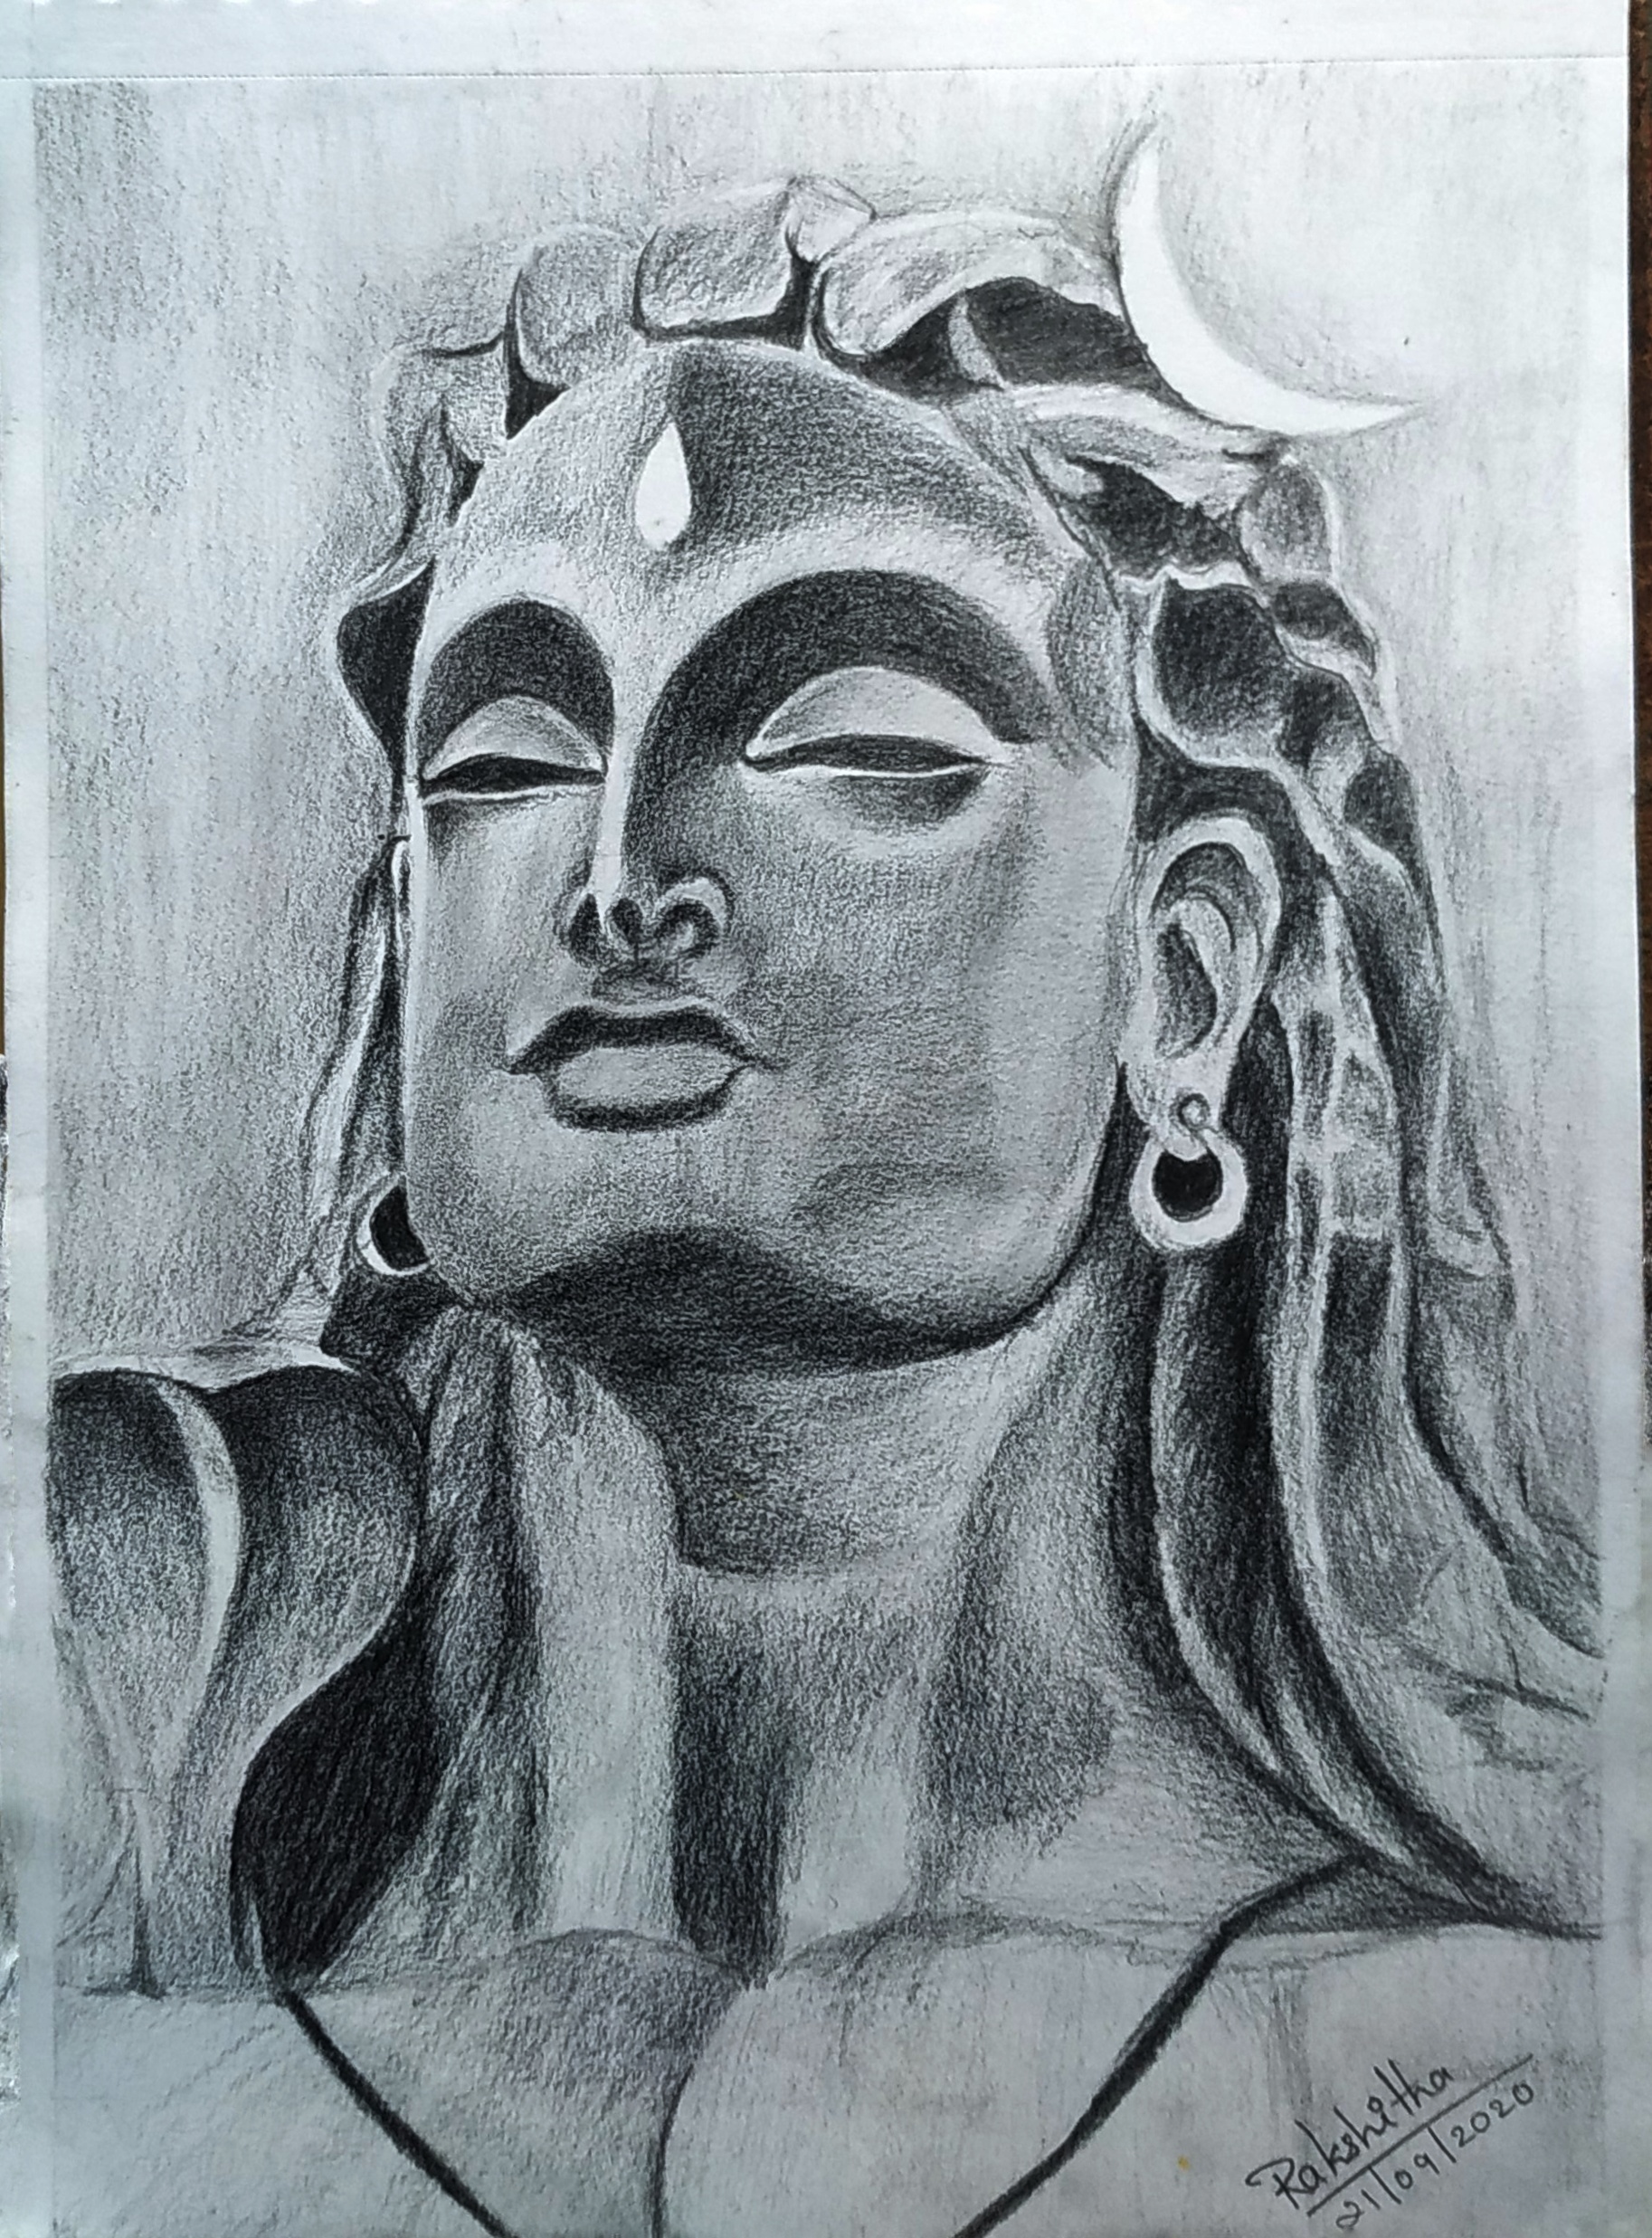 Wait for end guys Drawing on shivji on this spcl shivratri  Har har  mahadev     art artist shivji shivratri bholenath  Instagram